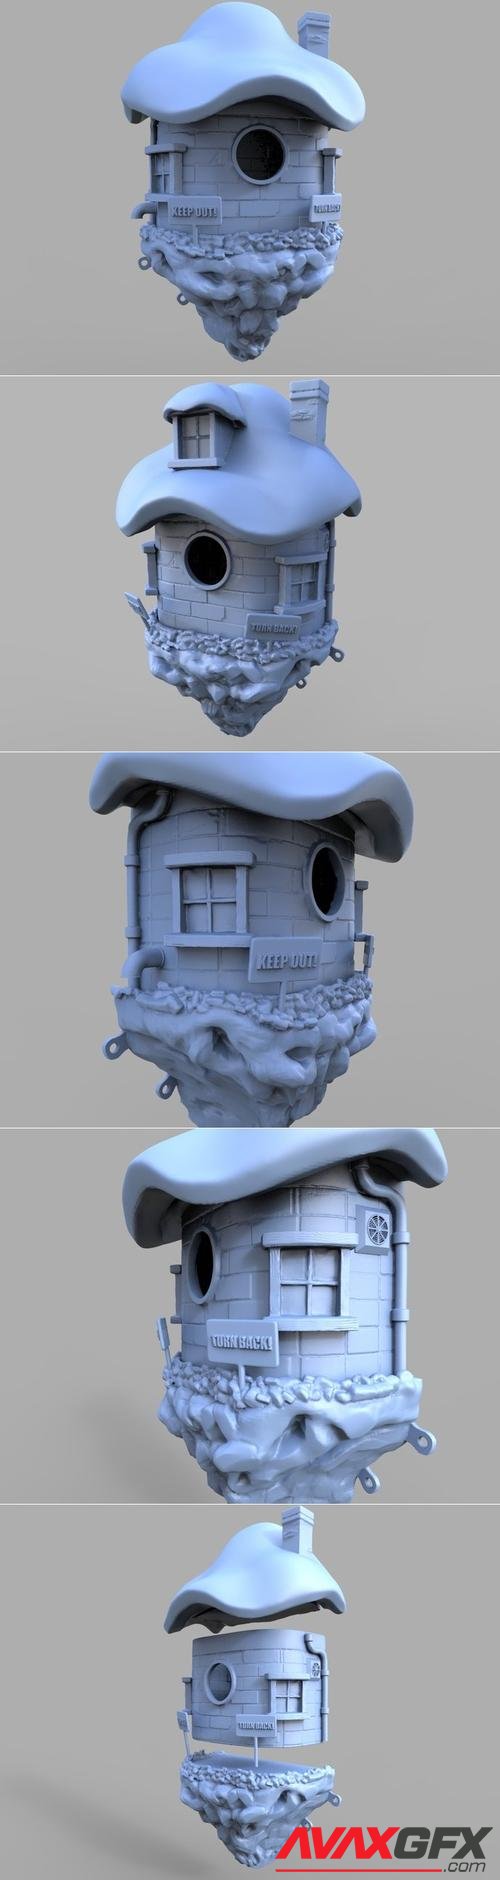 Dwarf Birdhouse – 3D Print